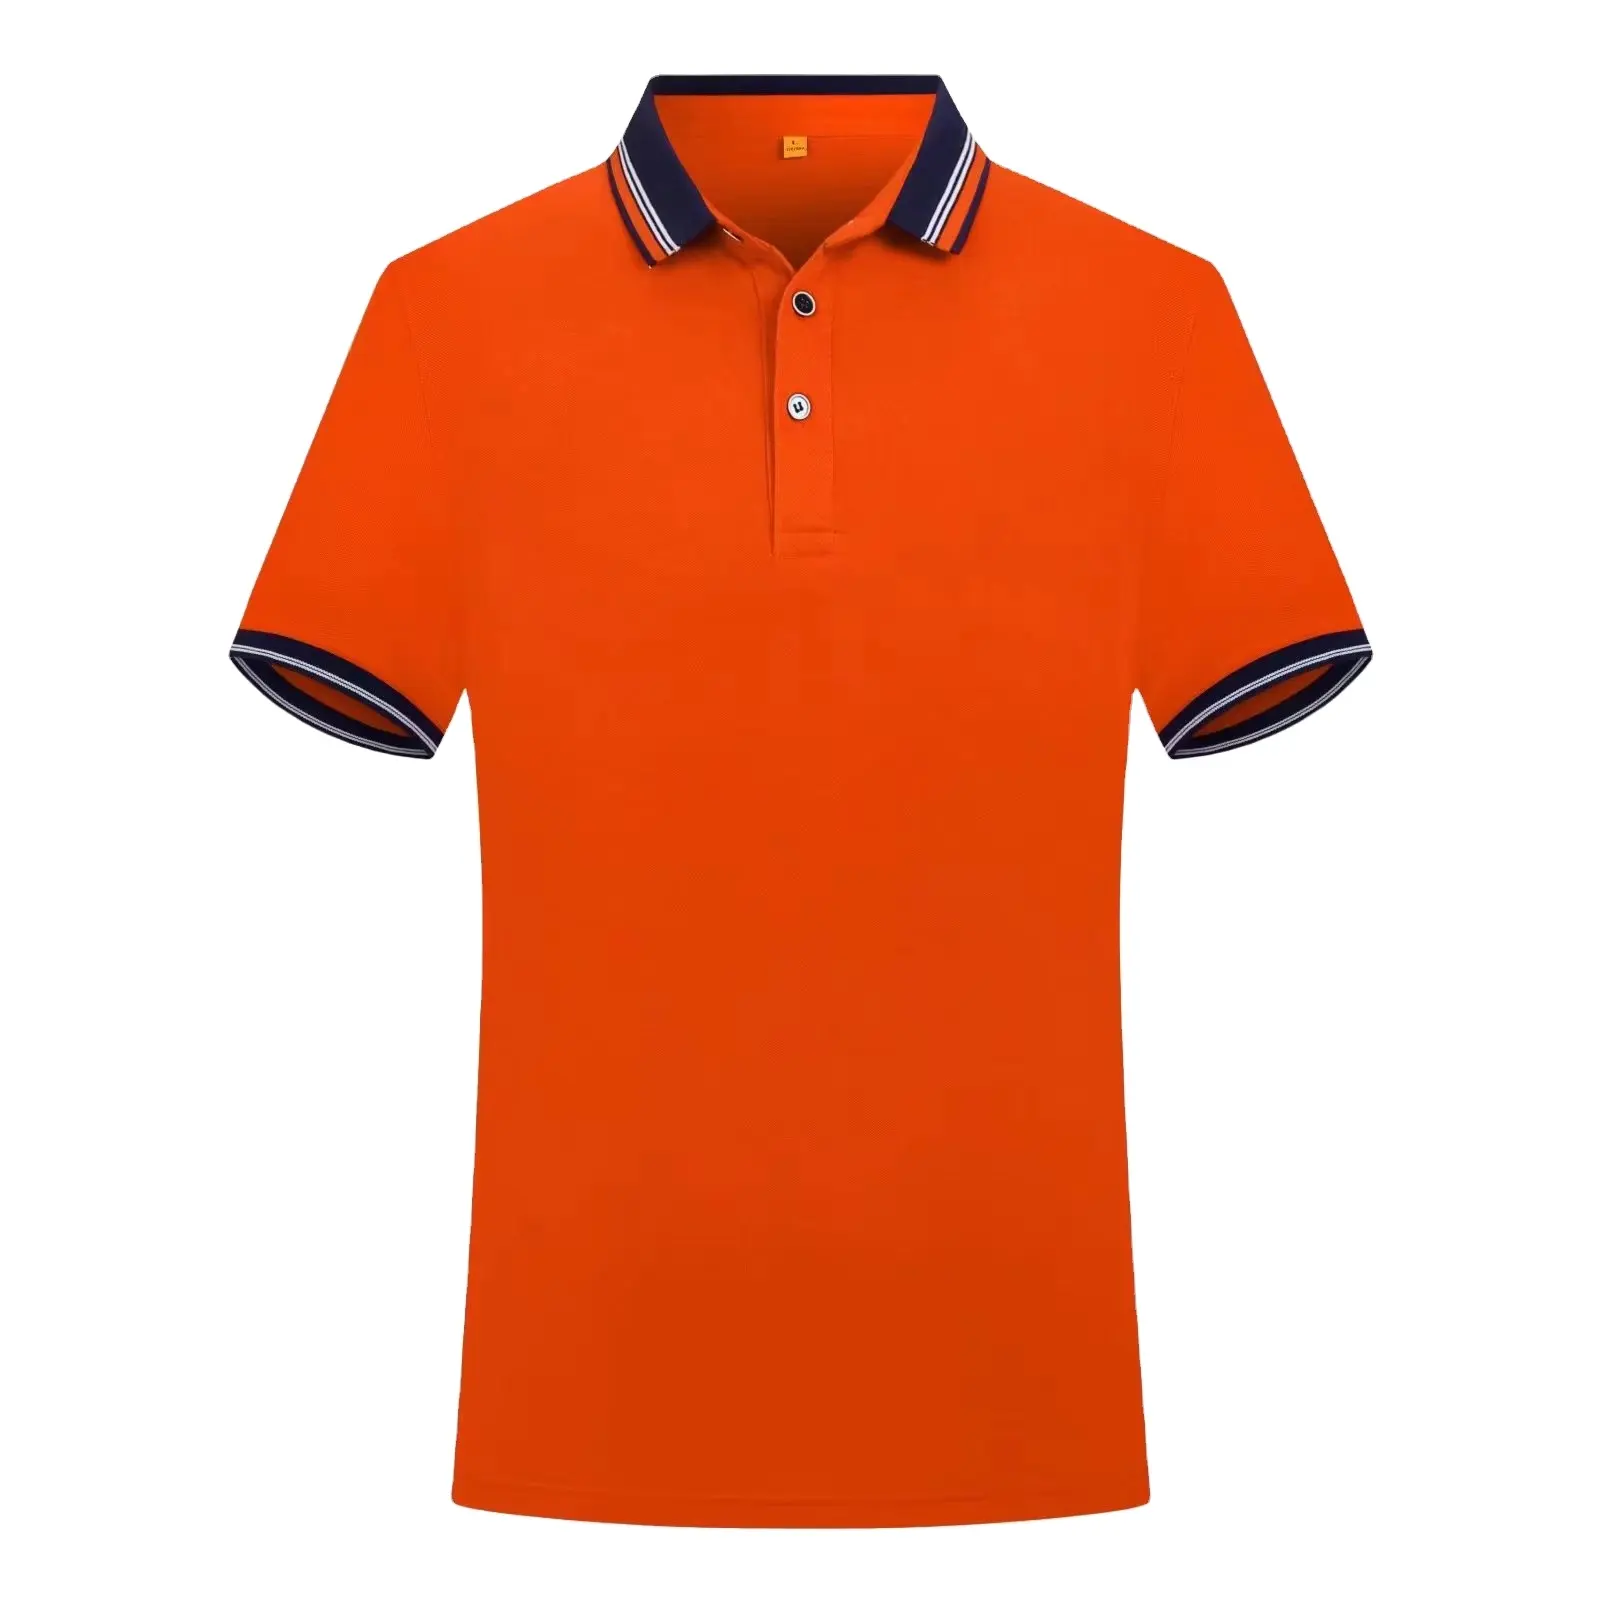 Wholesale blank custom embroidered logo men's t-shirt high quality cotton work clothes uniform custom men's polo shirt